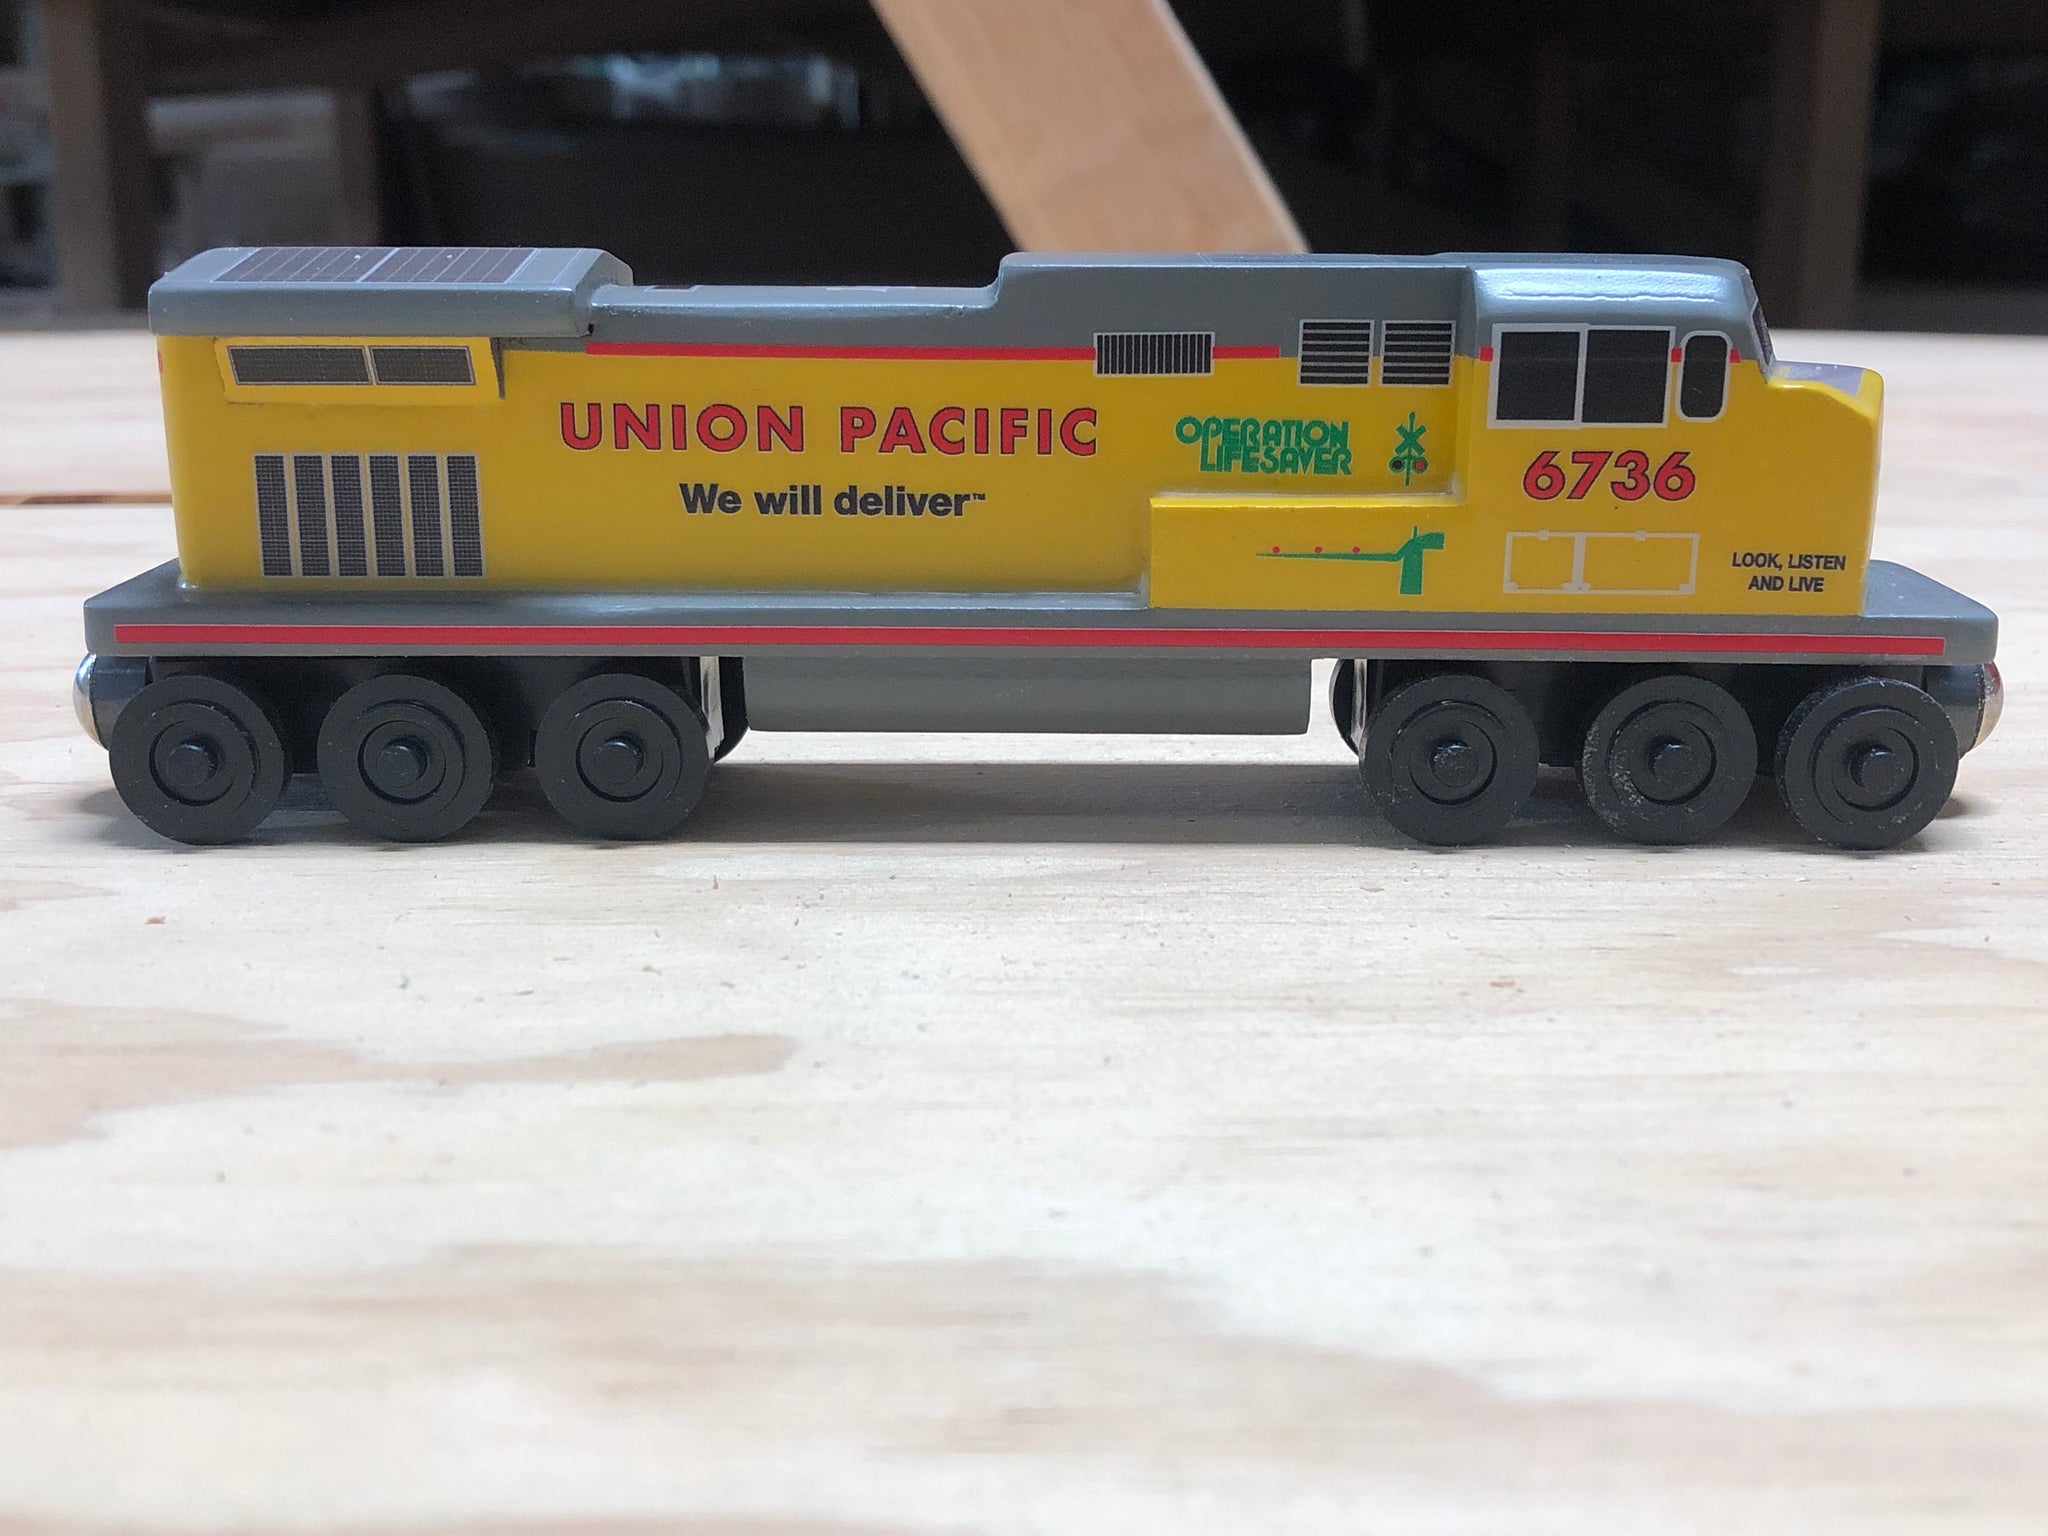 Union Pacific Operation Lifesaver C-44 Diesel Engine Toy Train